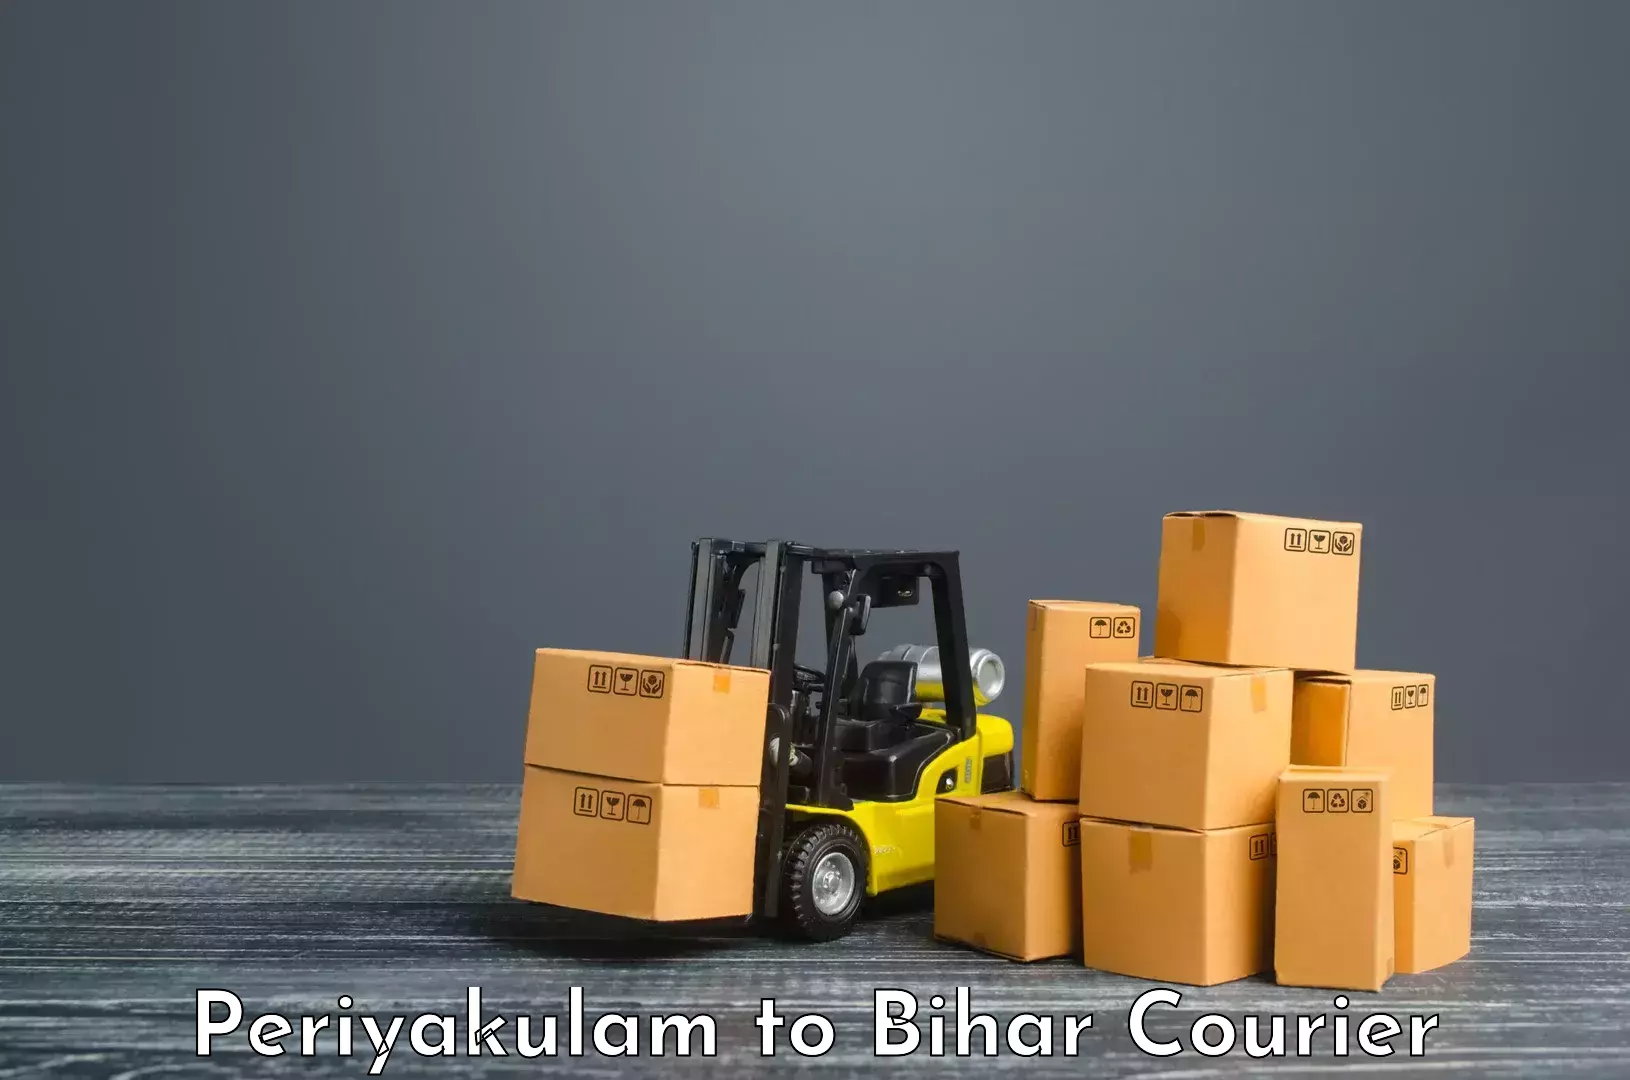 Bulk courier orders Periyakulam to Lakhisarai